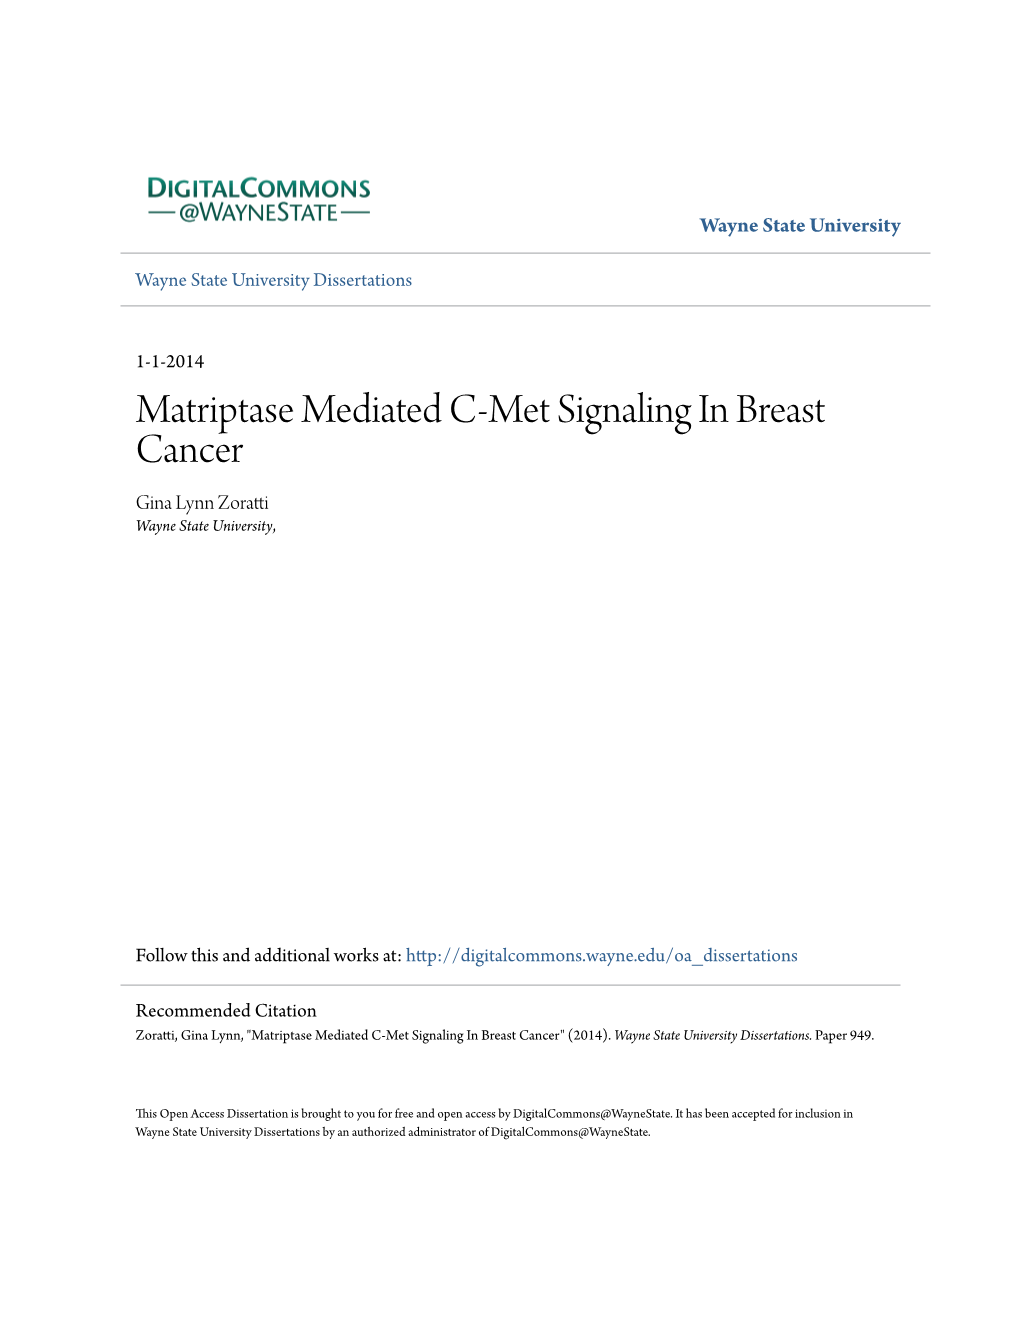 Matriptase Mediated C-Met Signaling in Breast Cancer Gina Lynn Zoratti Wayne State University